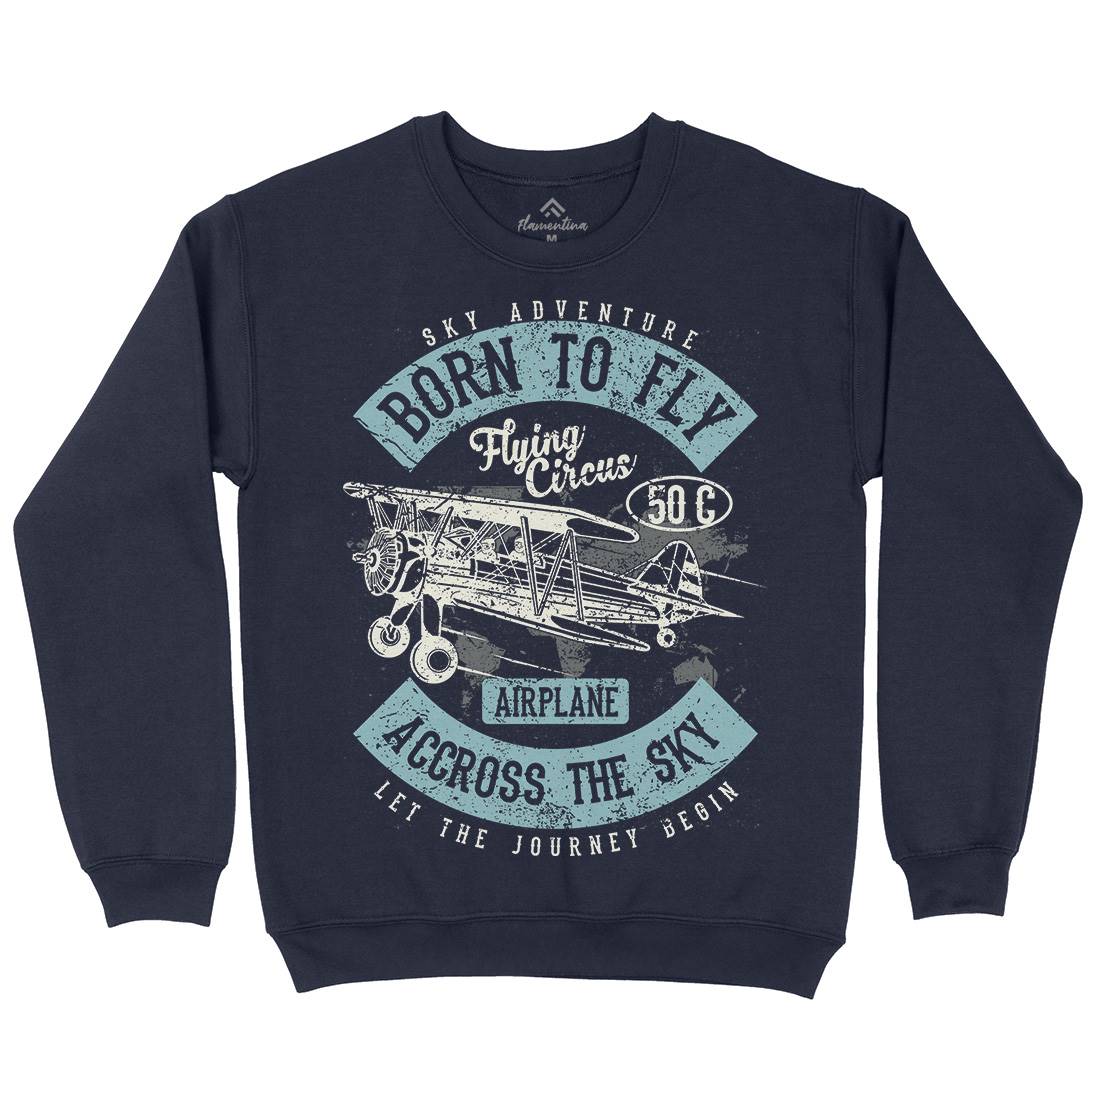 Born To Fly Kids Crew Neck Sweatshirt Vehicles A019